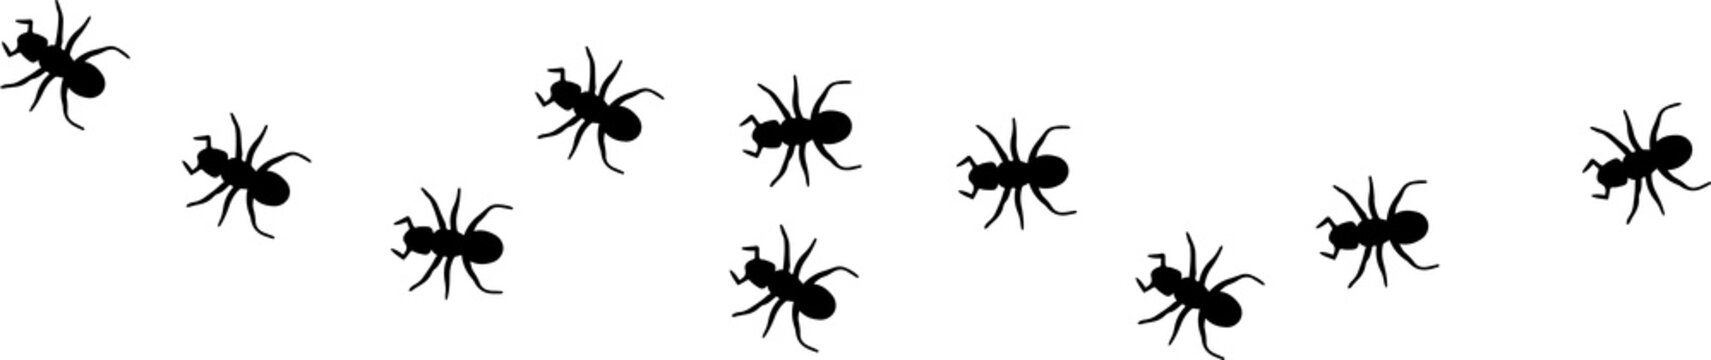 ant icon isolated on white background